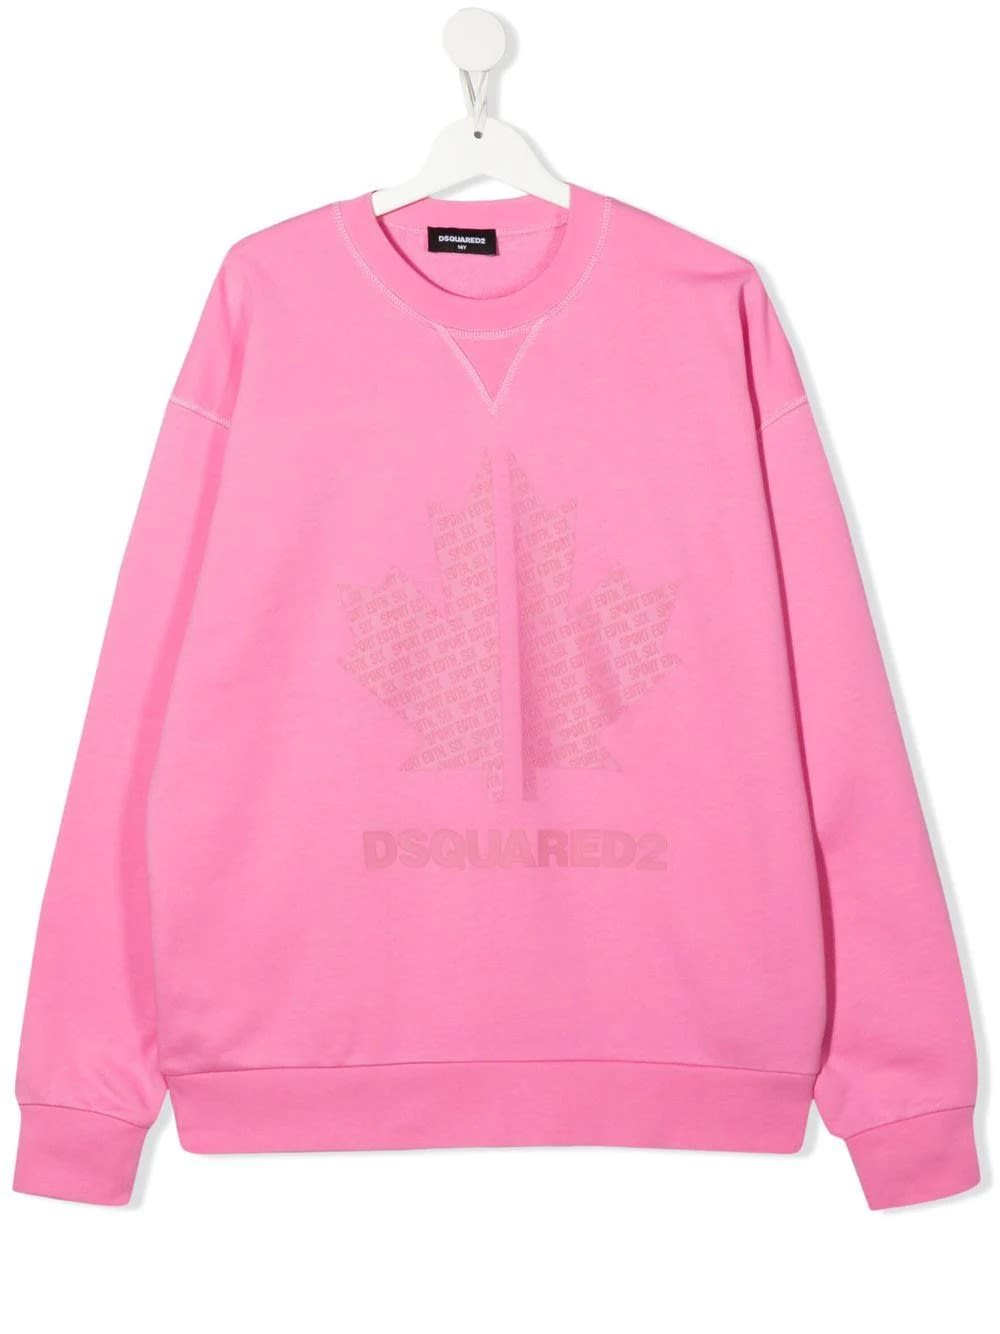 Dsquared2 Kids Pink Sweatshirt With Print D2kids Sport Edtn.06 Logo